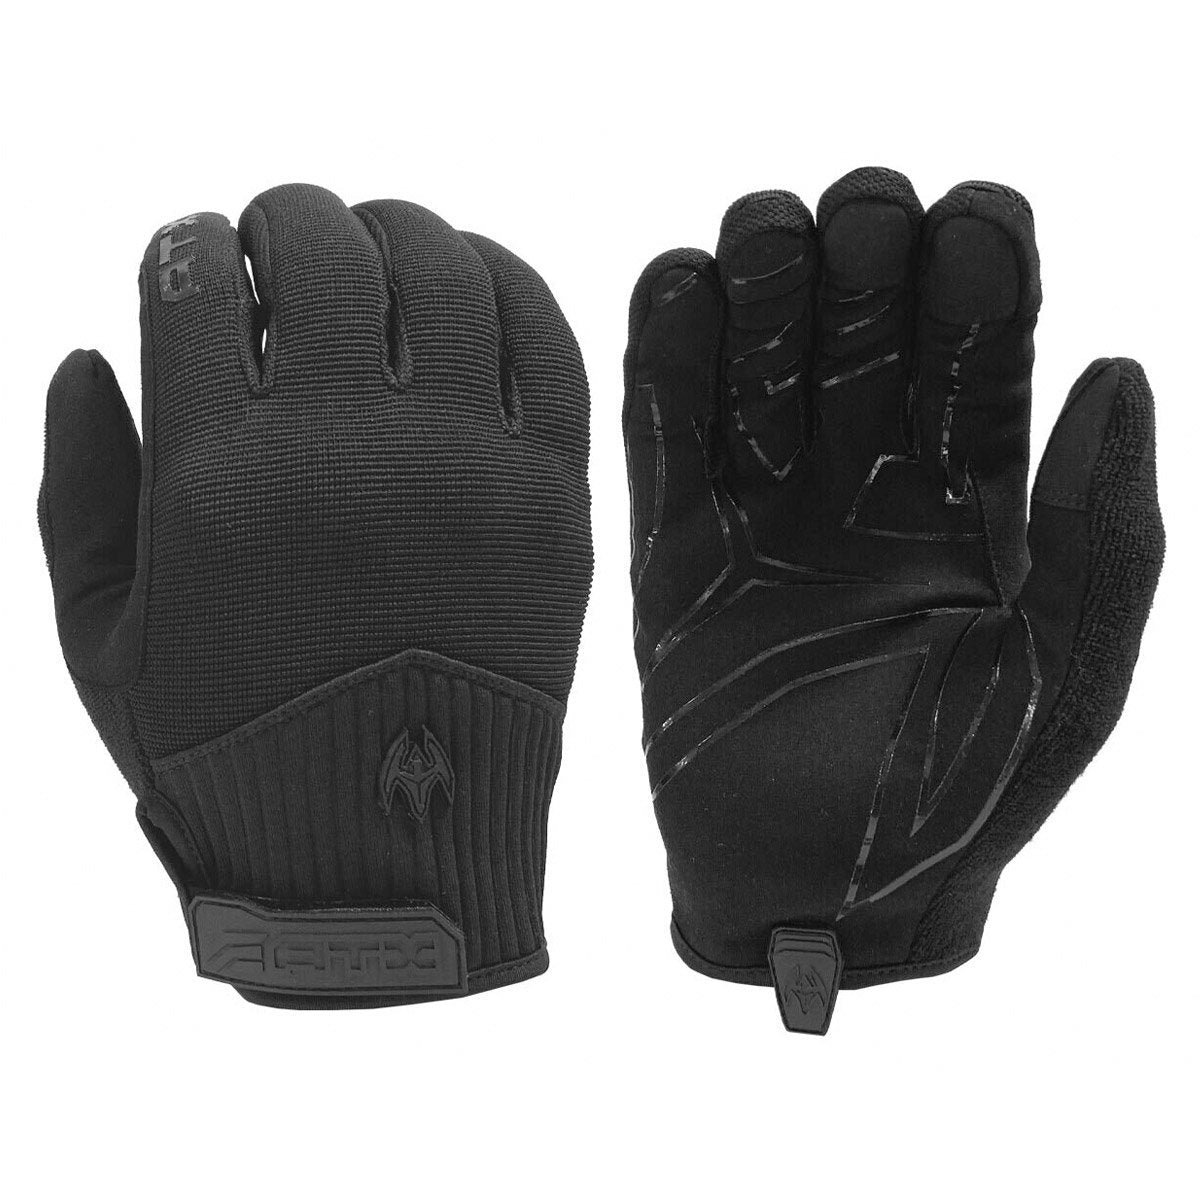 Damascus ATX66 Unlined Hybrid Duty Gloves | Tactial Gear Australia Tactical Gear